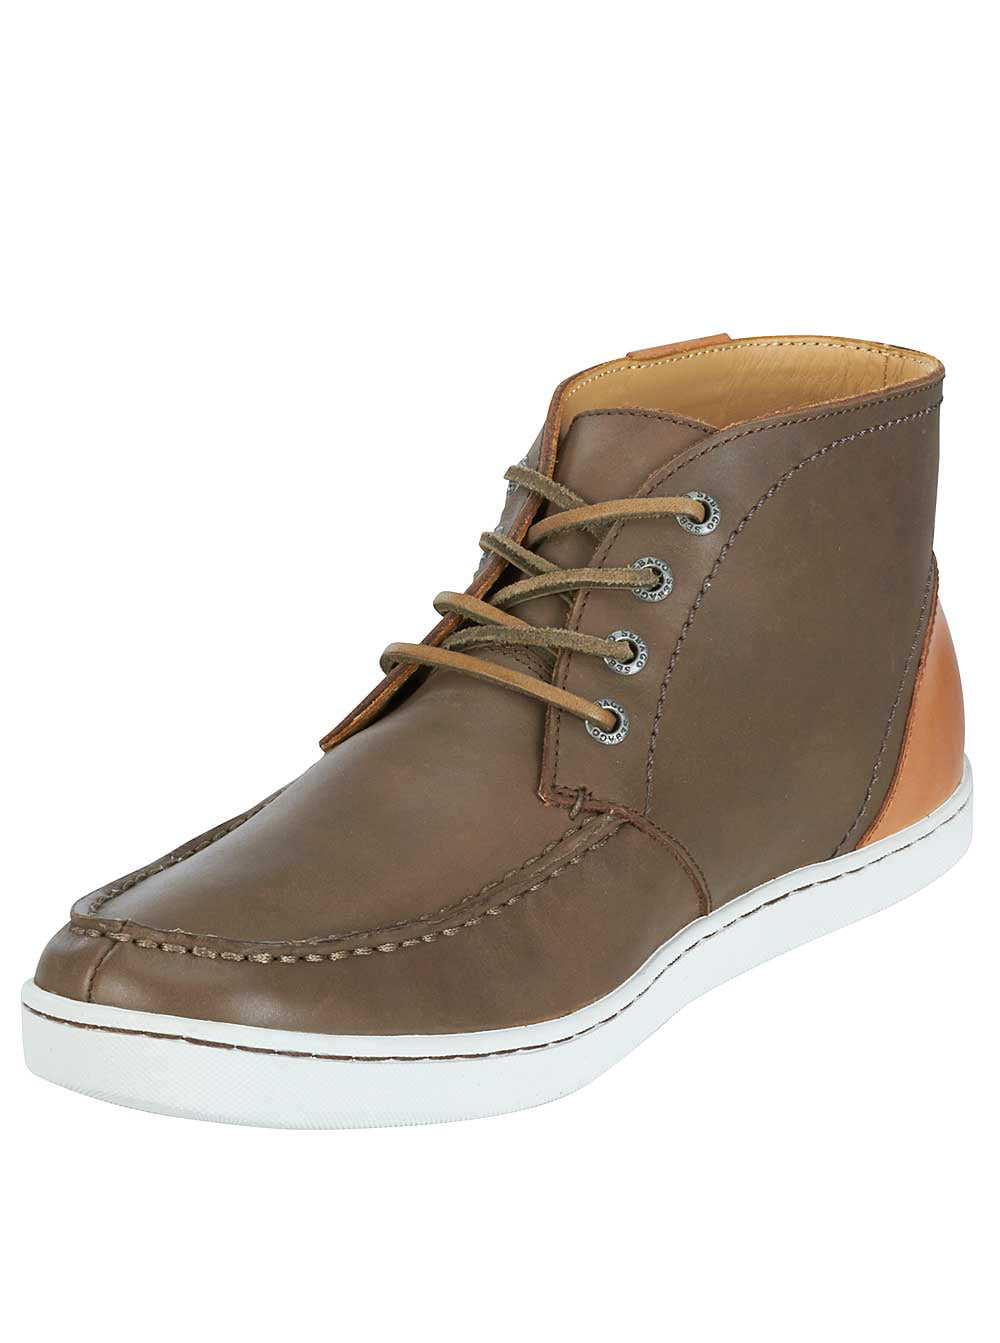 Sebago Mens Ryde Chukka Boots in Dark Taupe/Tan Leather - Walmart.com